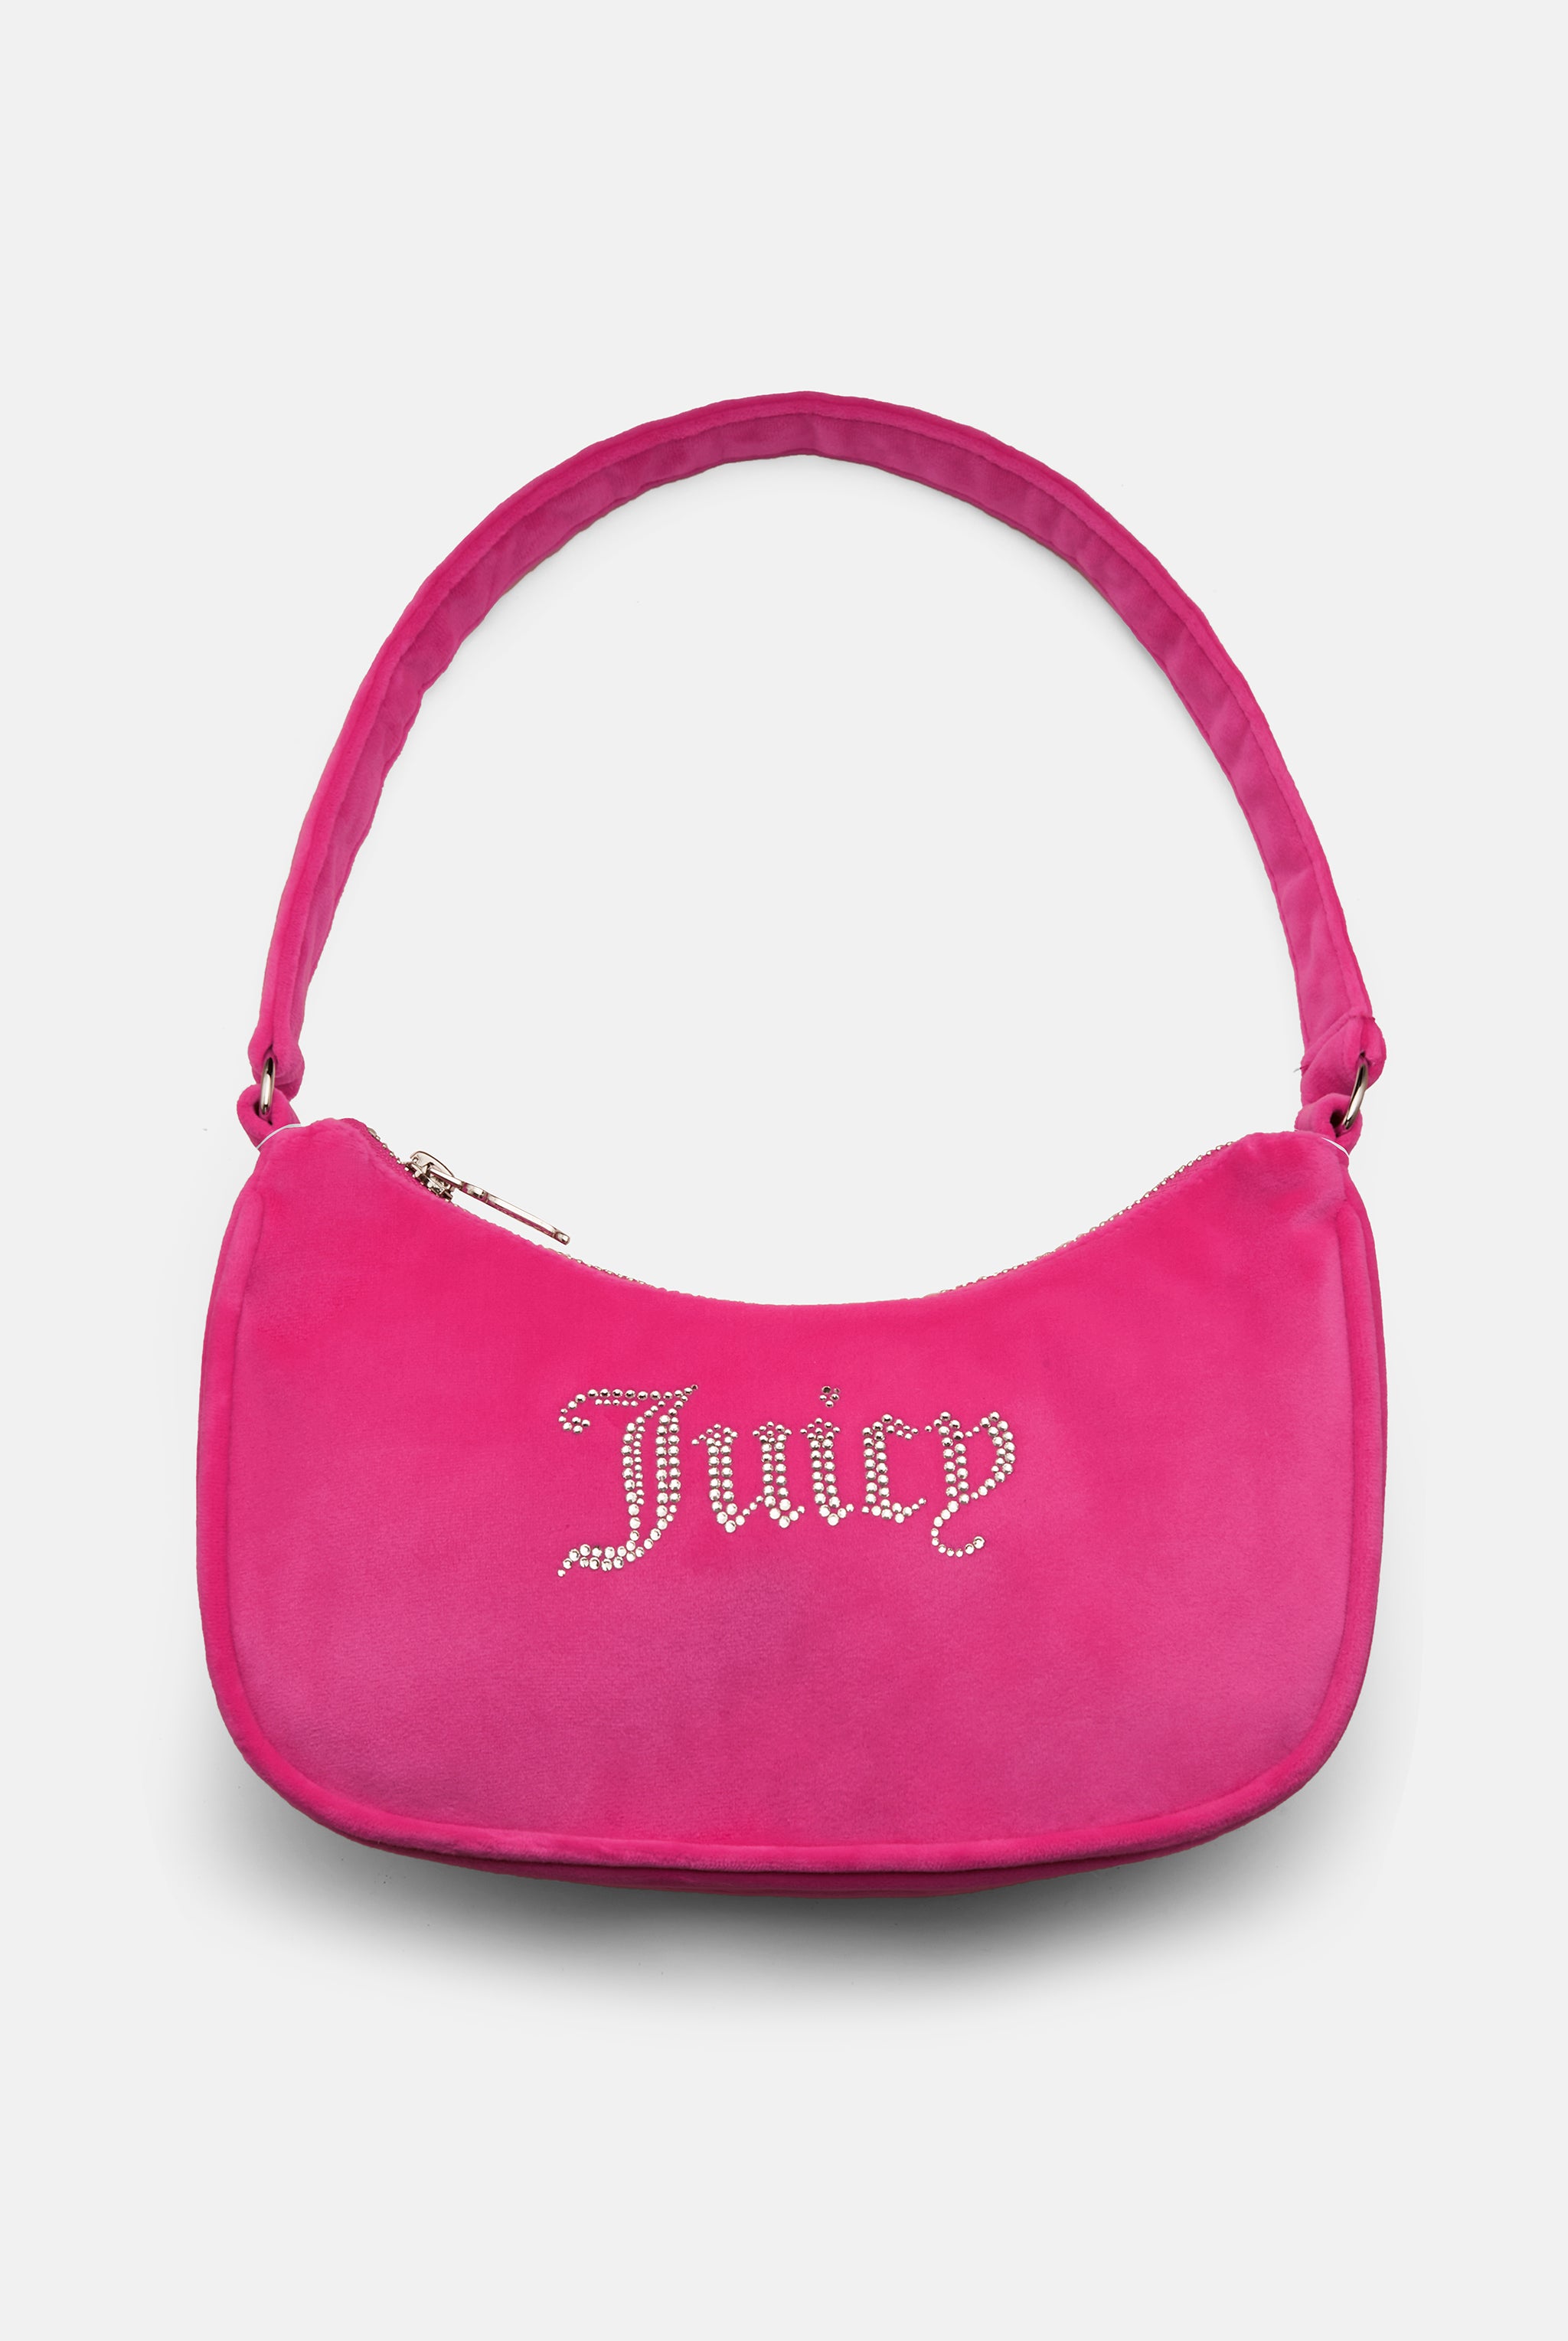 Vintage Y2K Hot Pink Velour Juicy Couture Tote Bag Purse | eBay